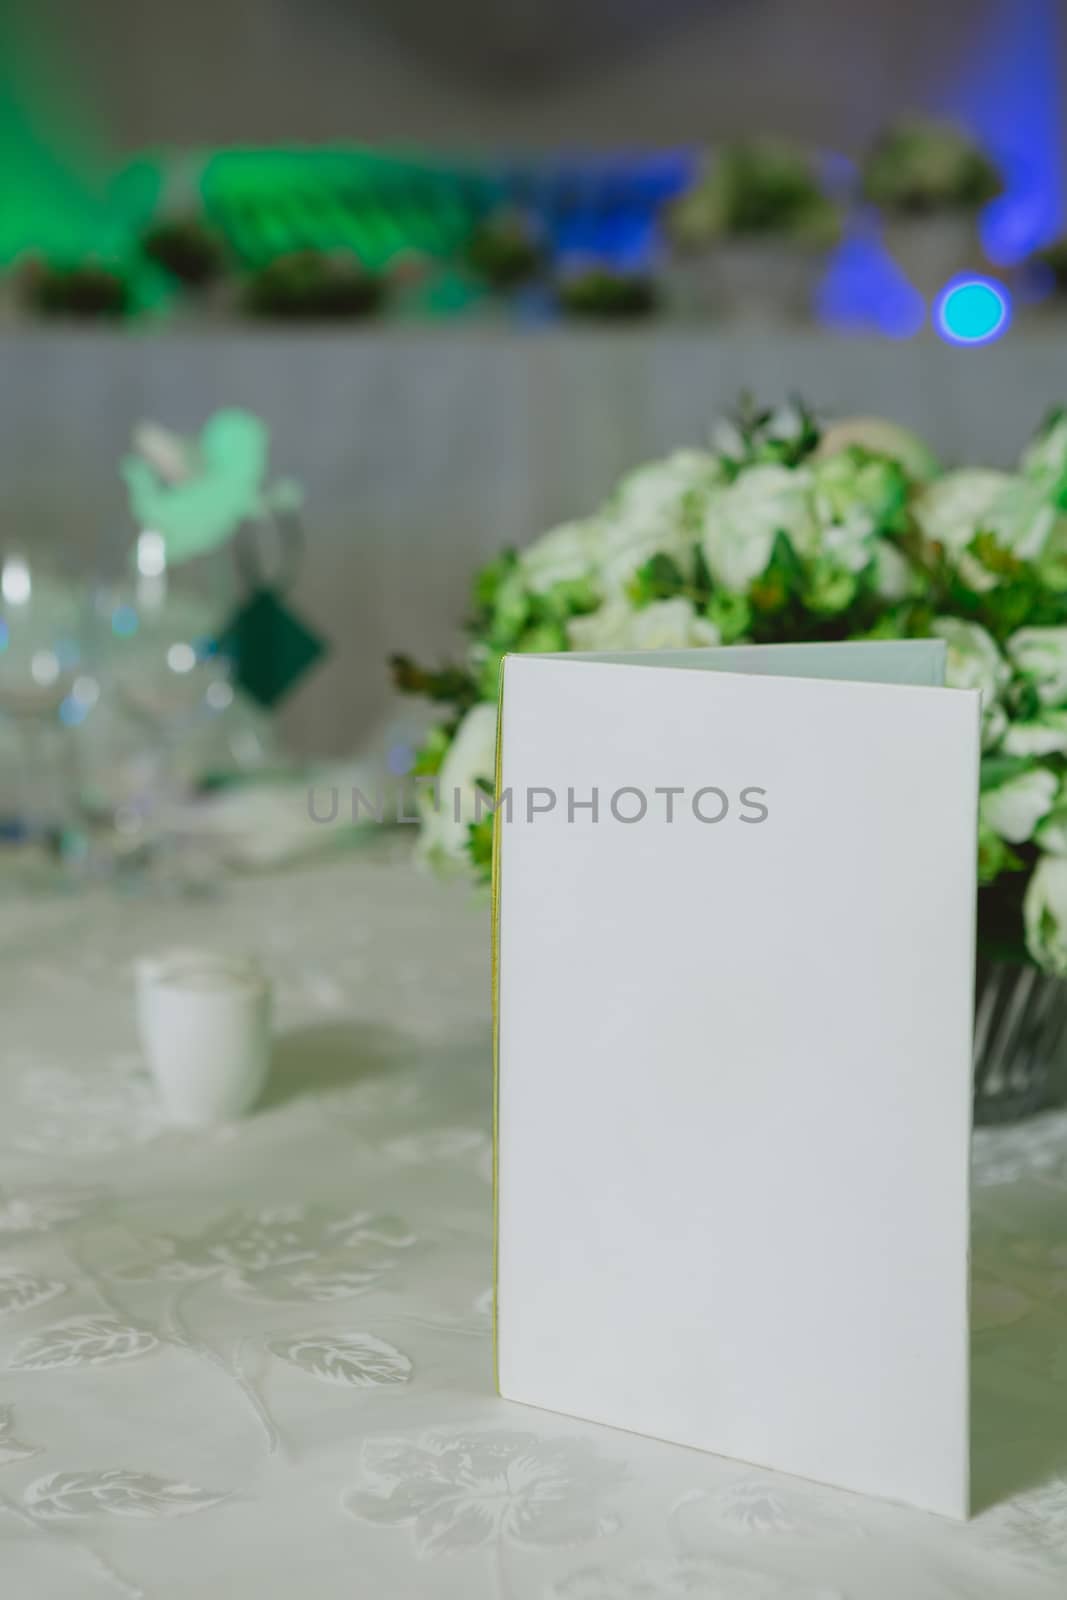 Elegant table set up for a wedding banquet